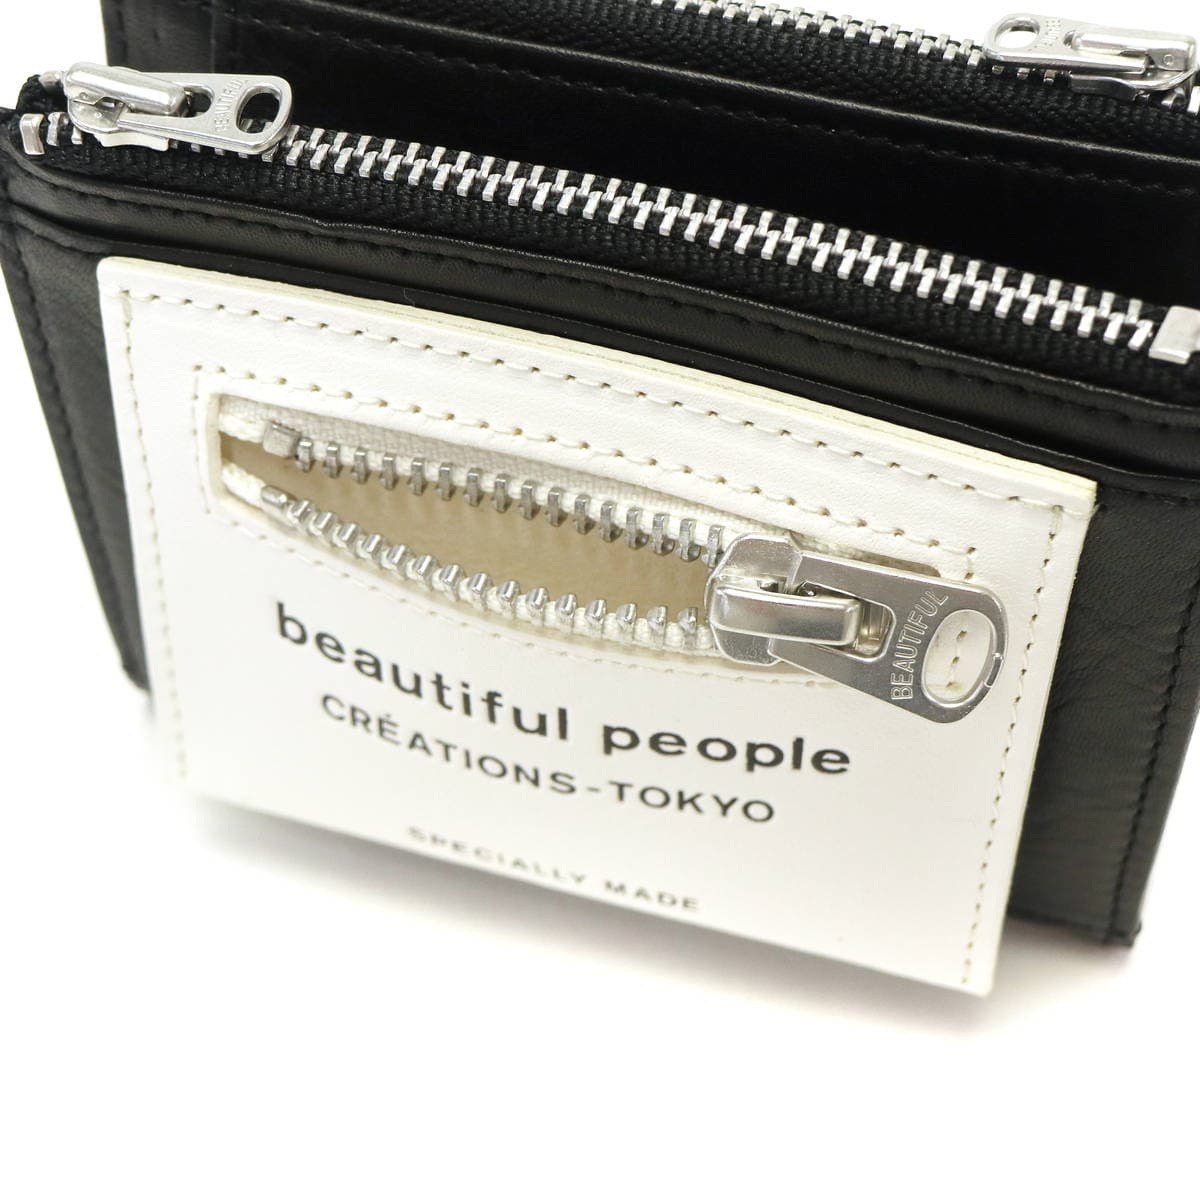 beautiful people 折り財布 | hartwellspremium.com